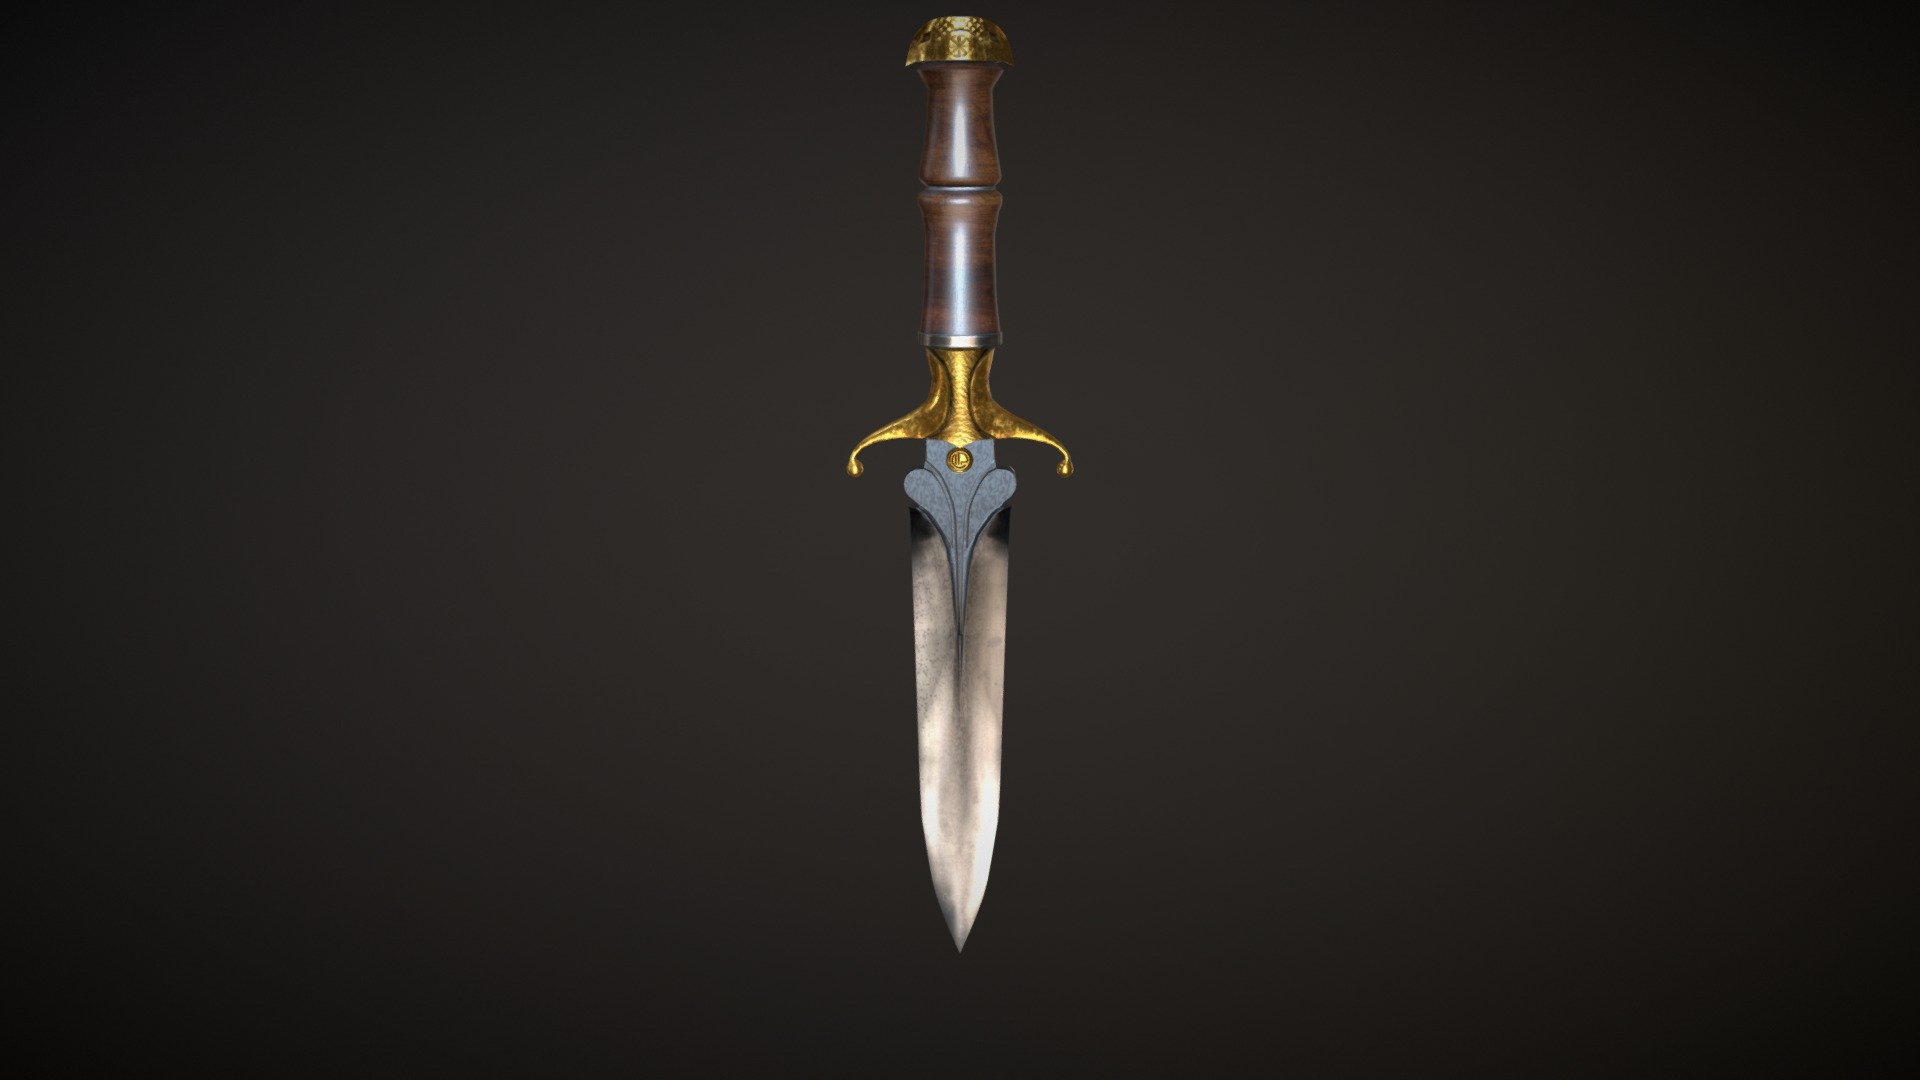 Damascus Steel Dagger